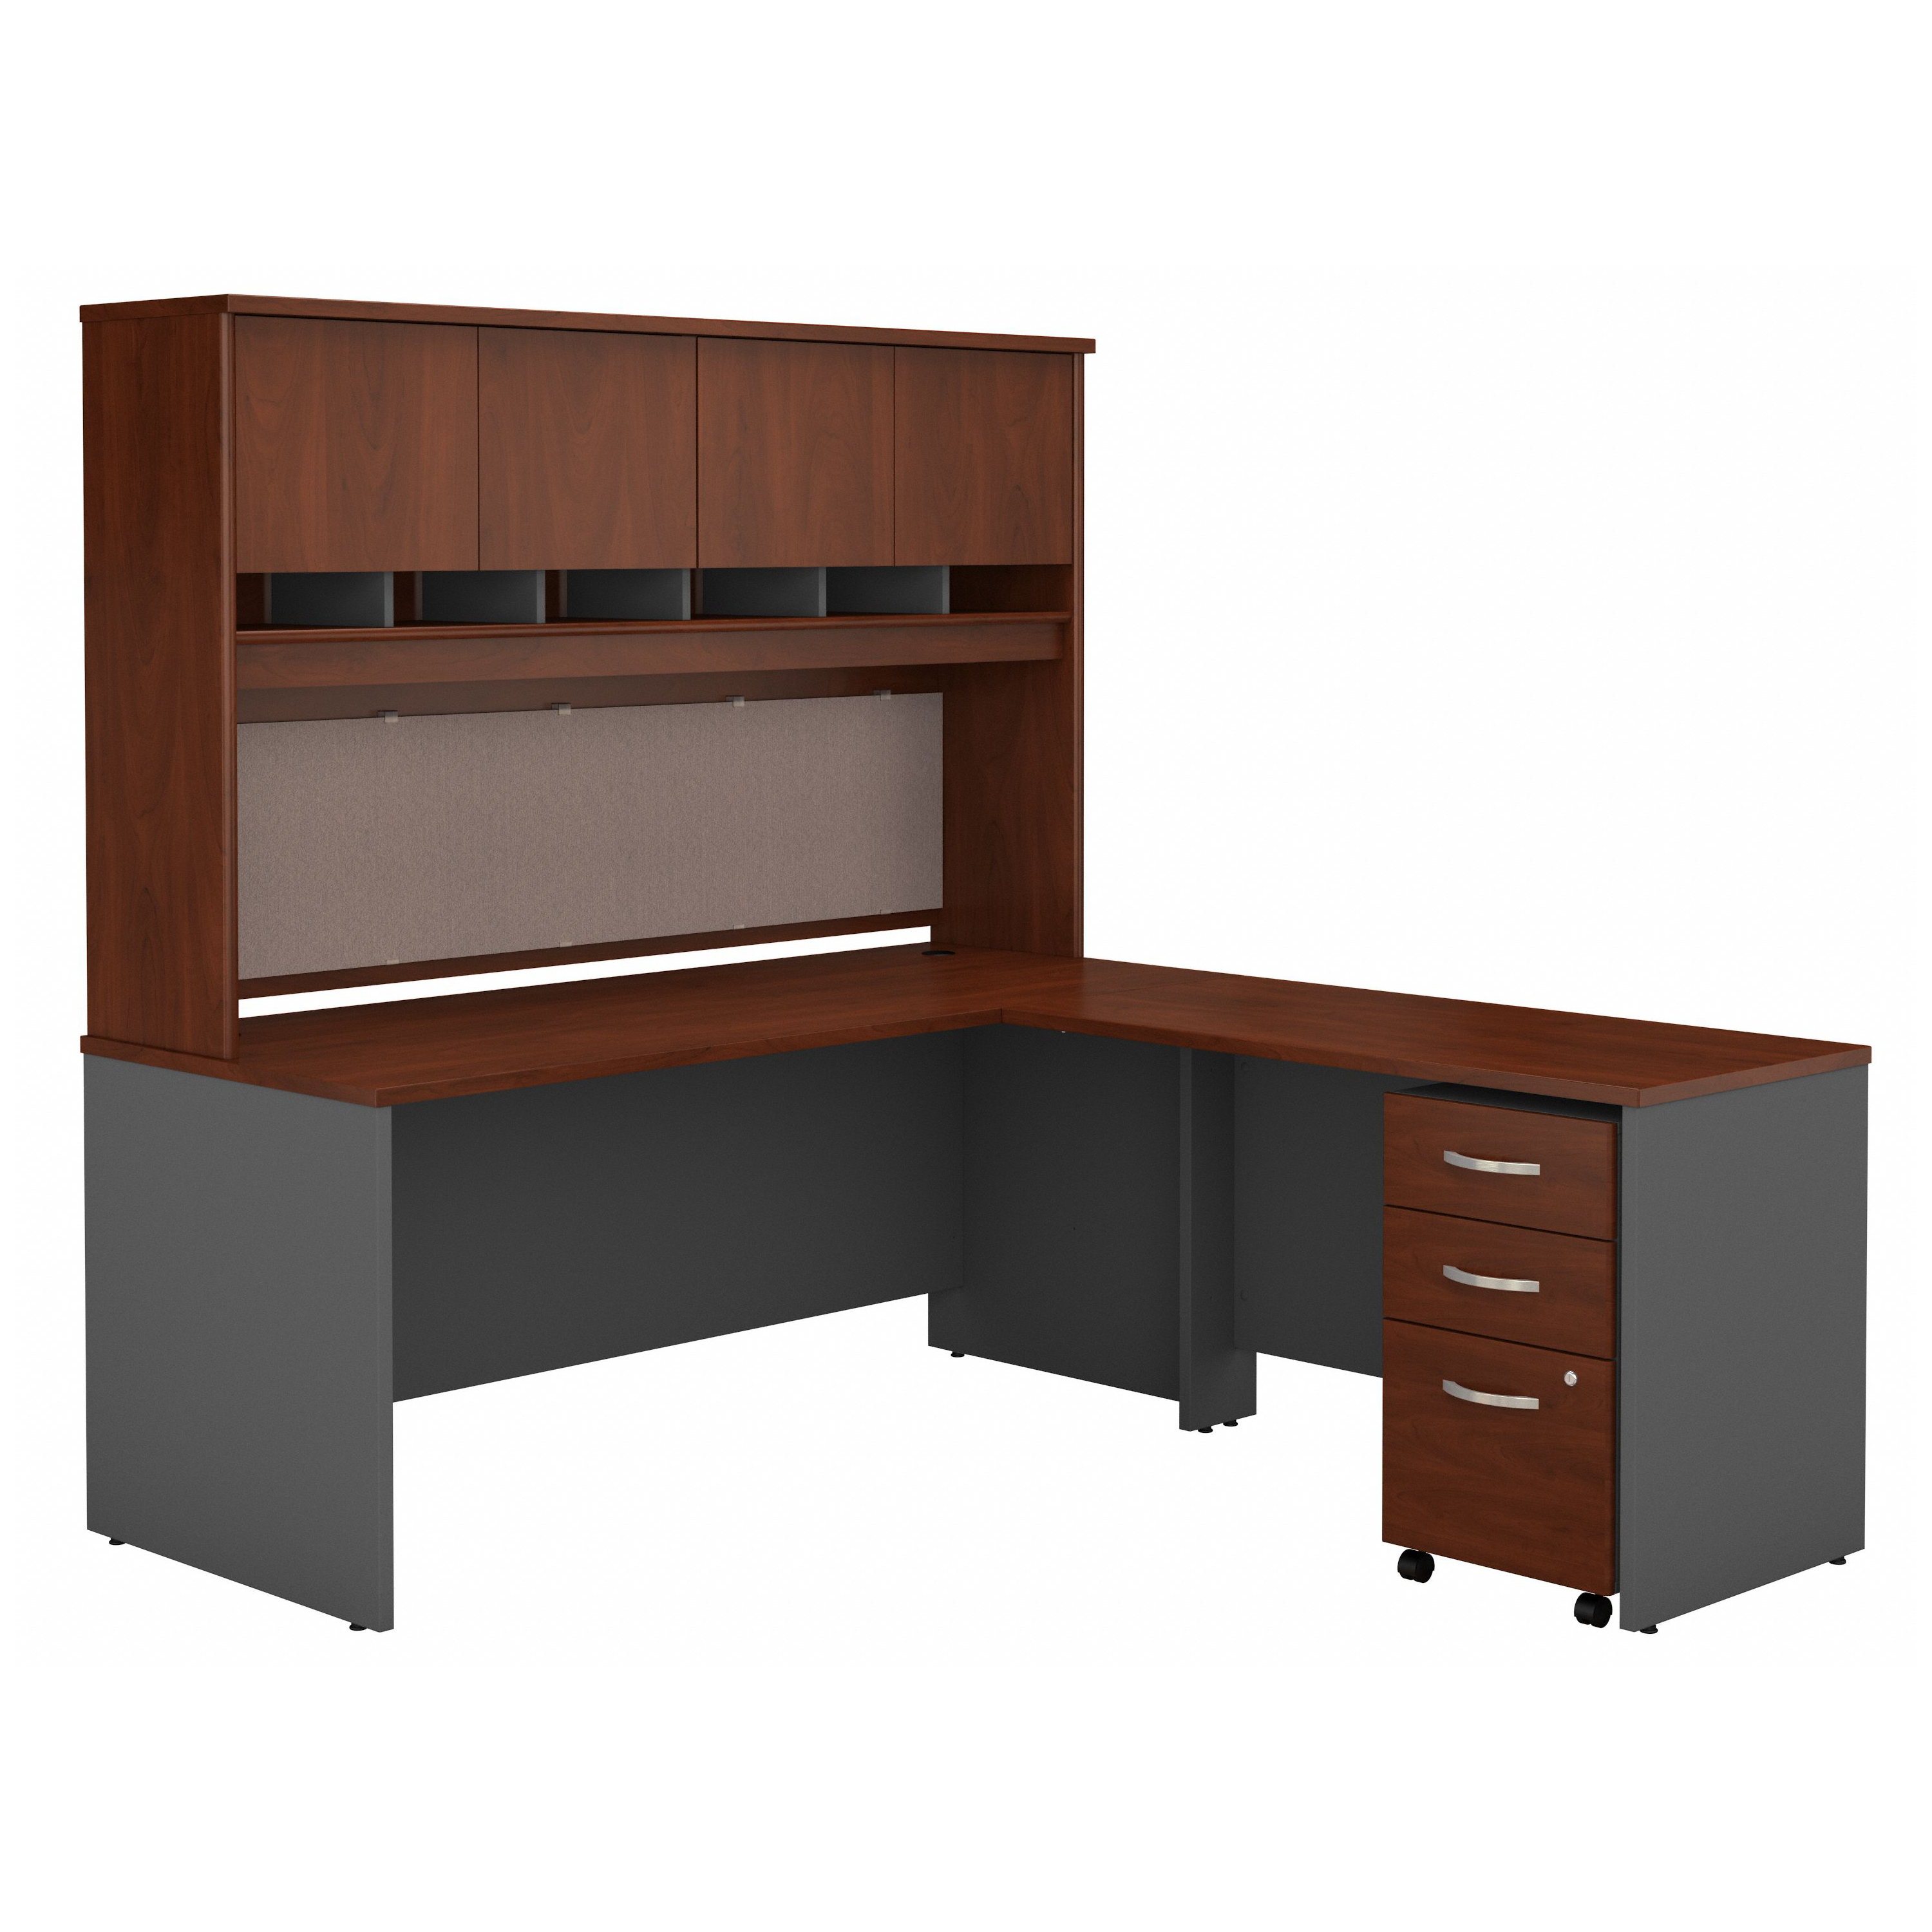 Shop Bush Business Furniture Series C 72W L Shaped Desk with Hutch and Mobile File Cabinet 02 SRC0018HCSU #color_hansen cherry/graphite gray